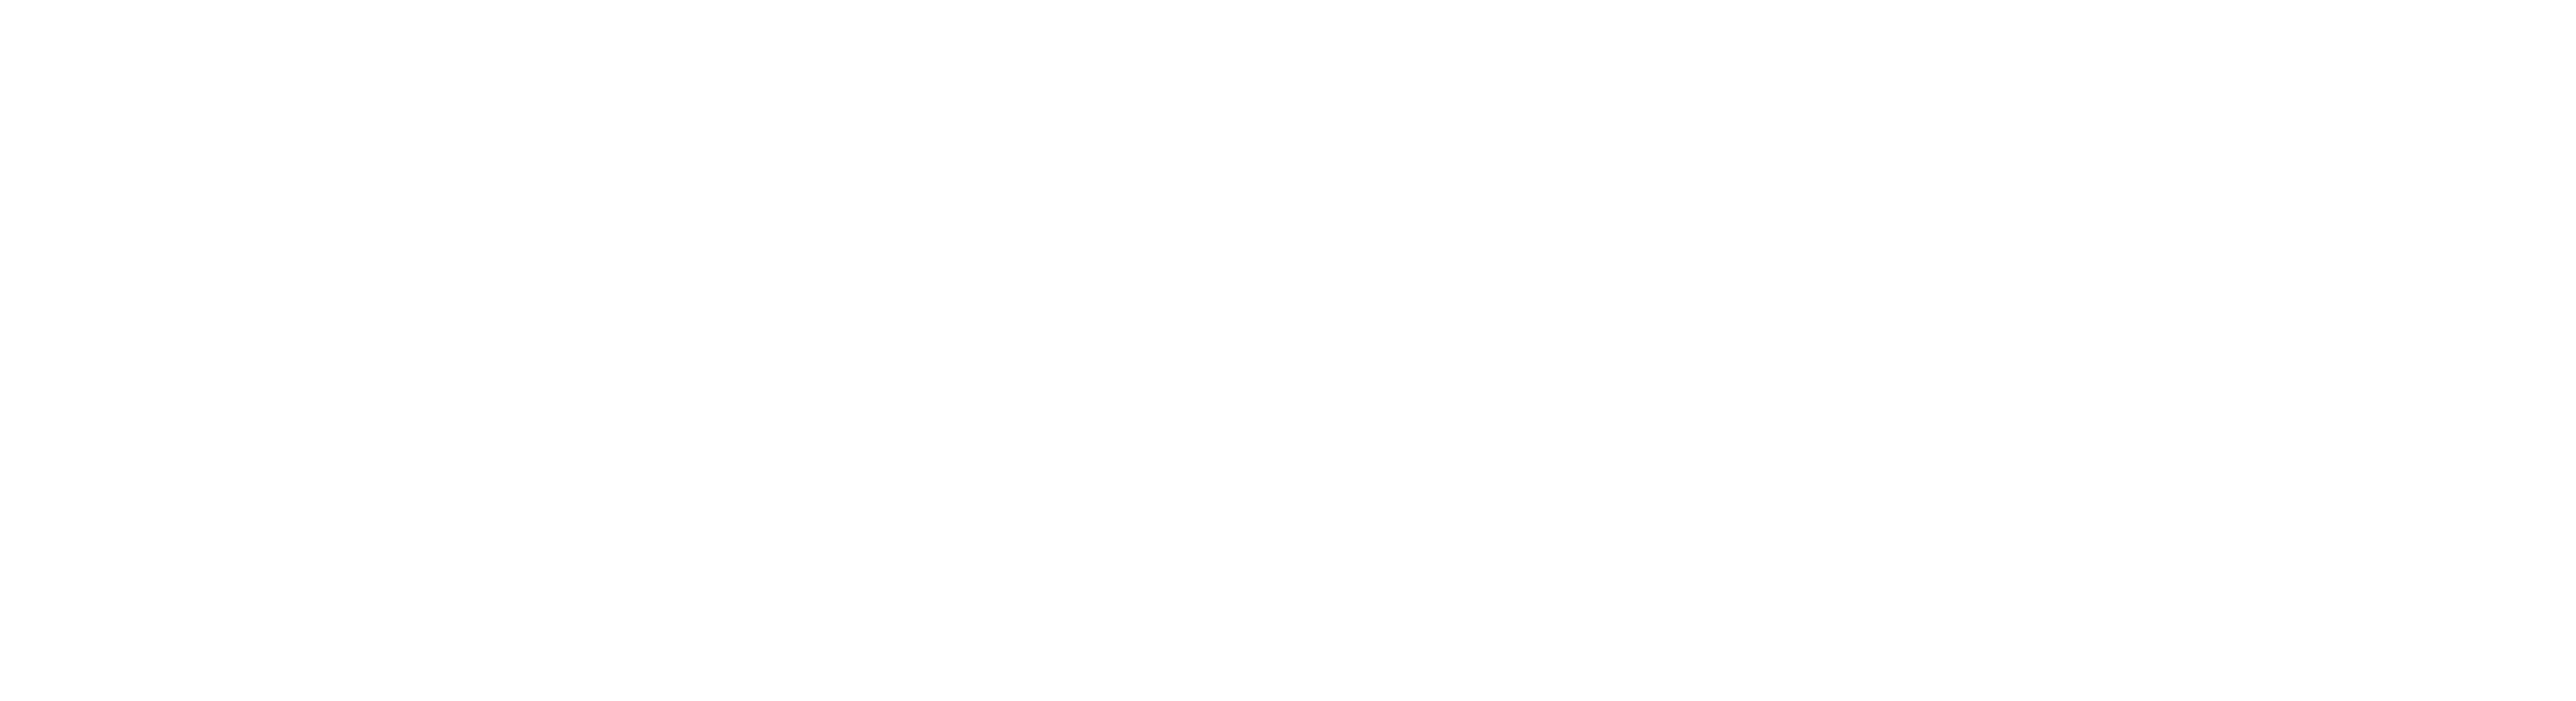 Ottershaw Beefmasters